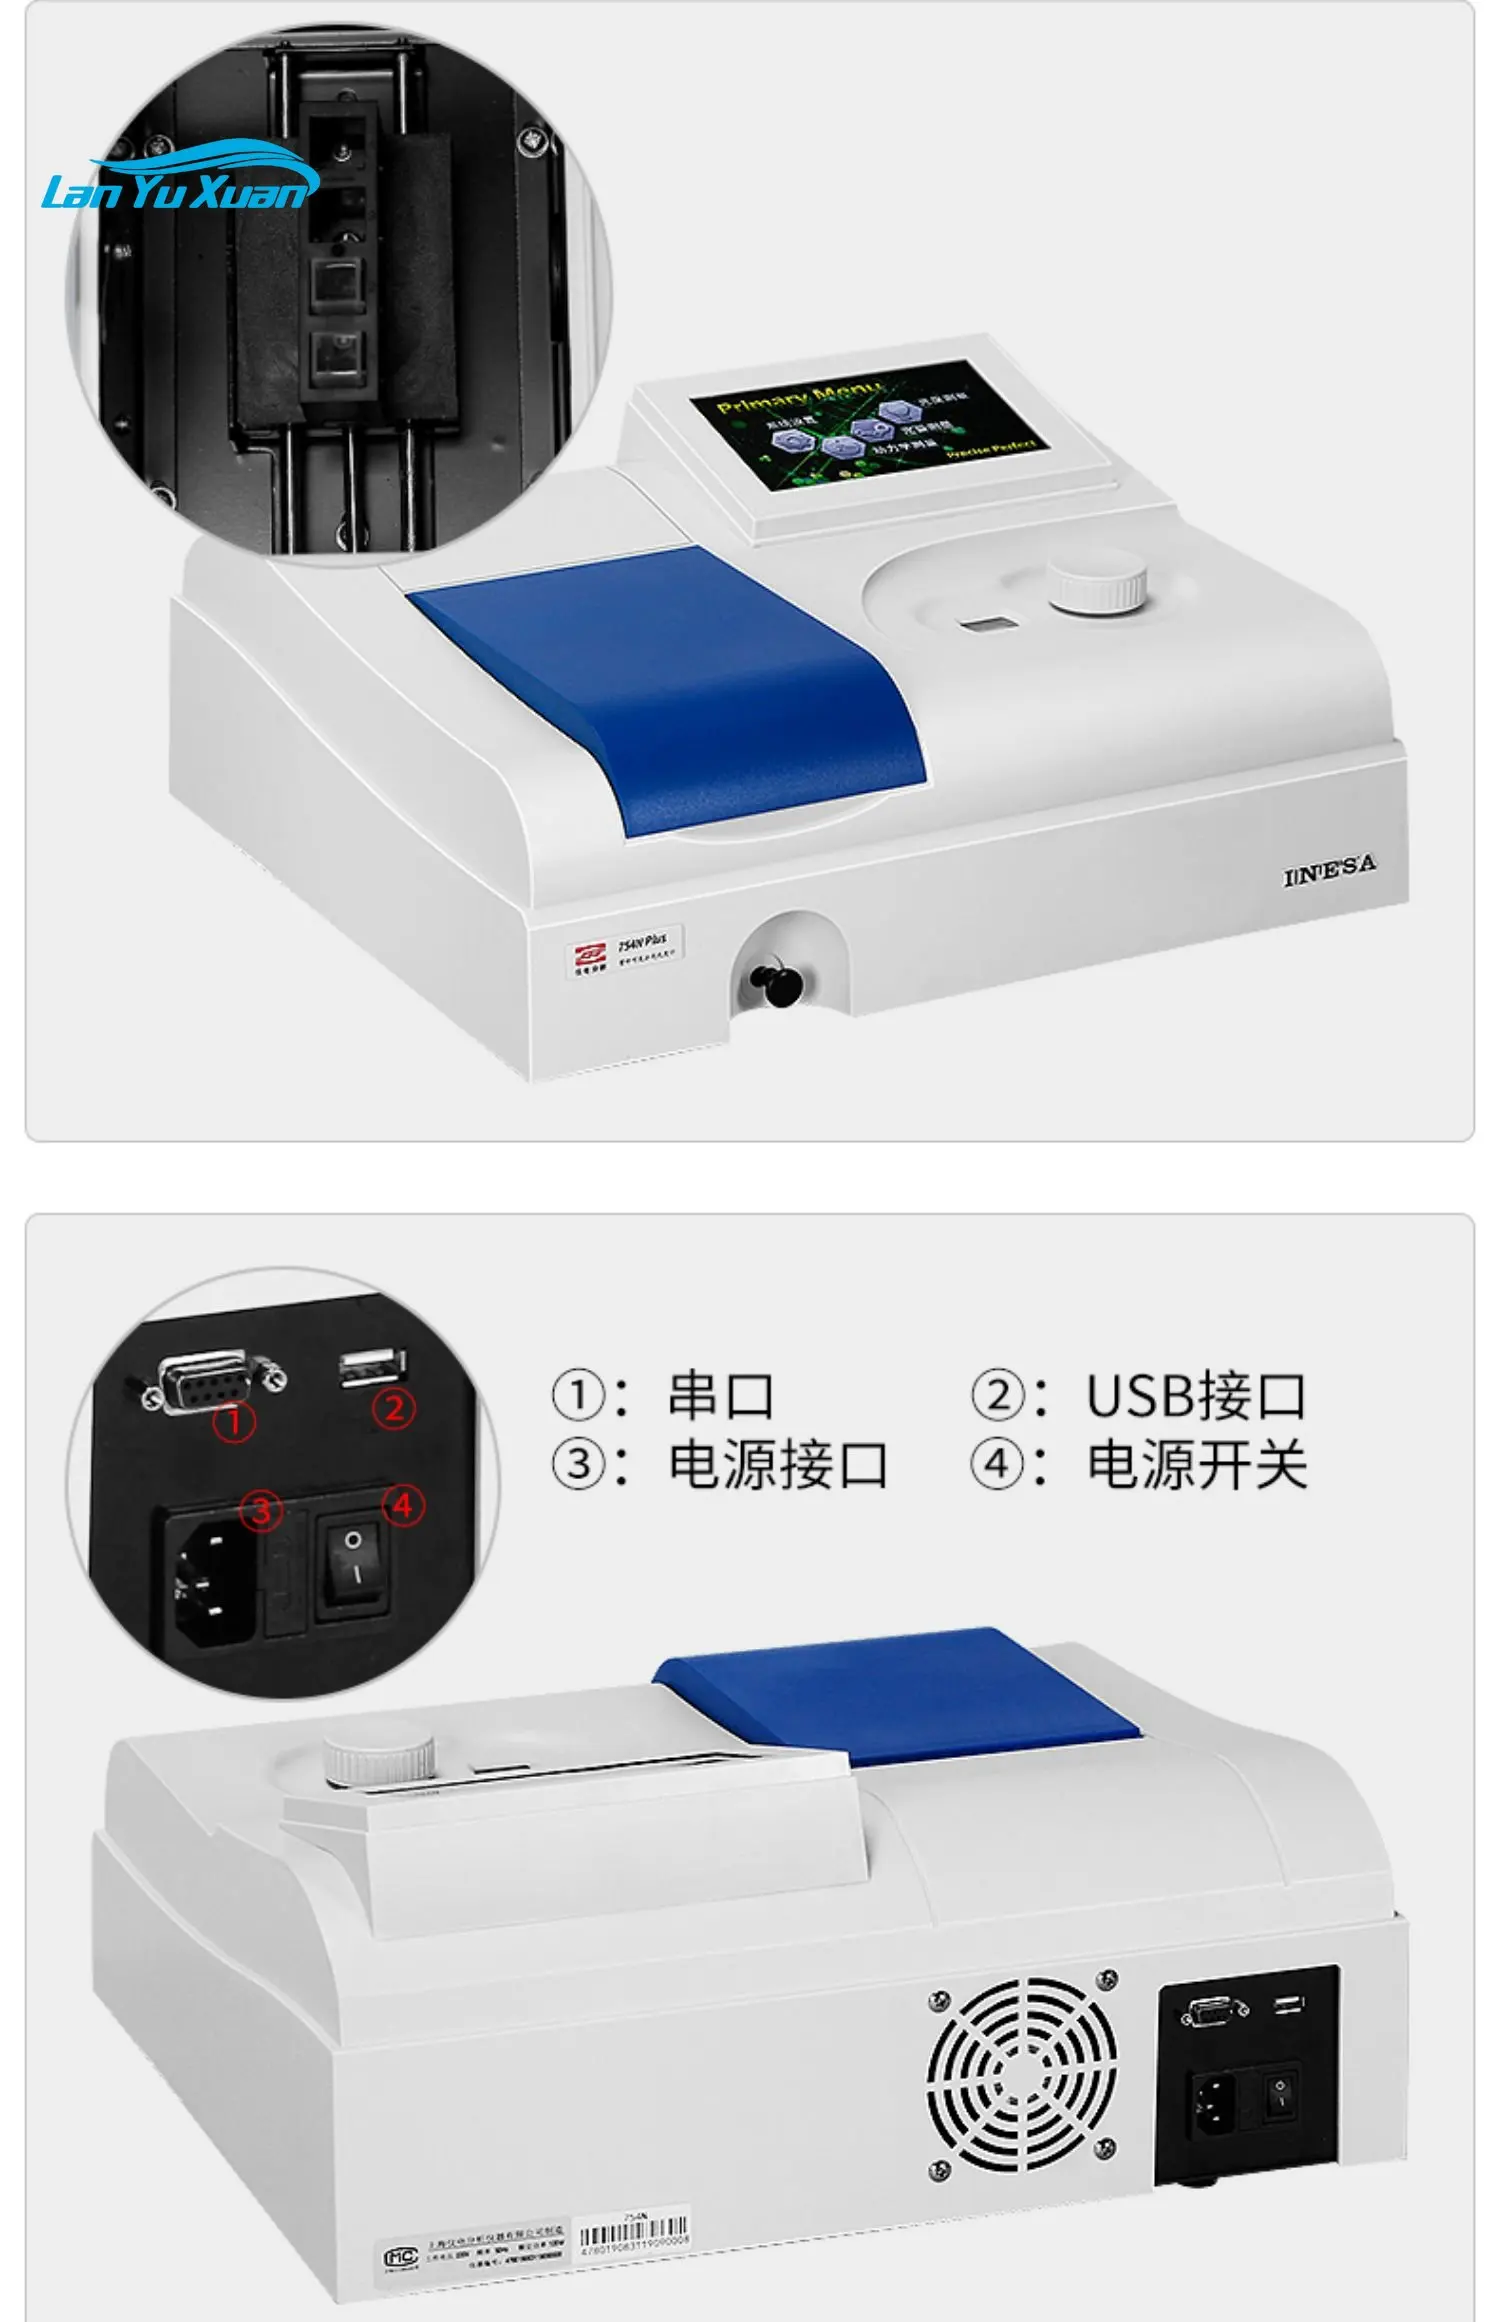 

Shanghai Shangfen Jingke 752N UV/VIS spectrophotometer laboratory benchtop spectrometer analyzer